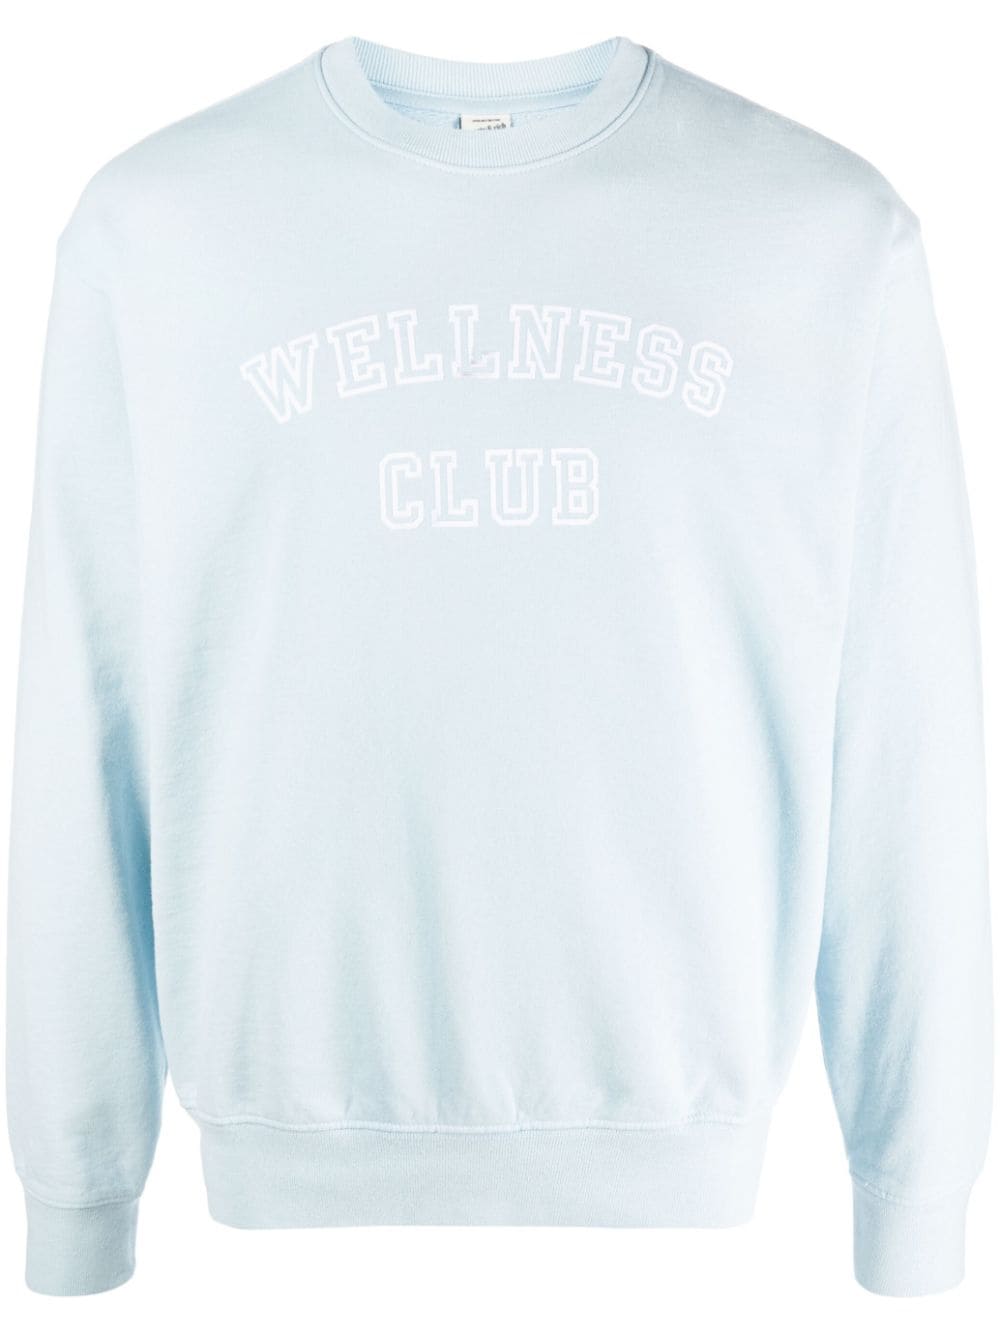 Wellness Club crew-neck sweatshirt